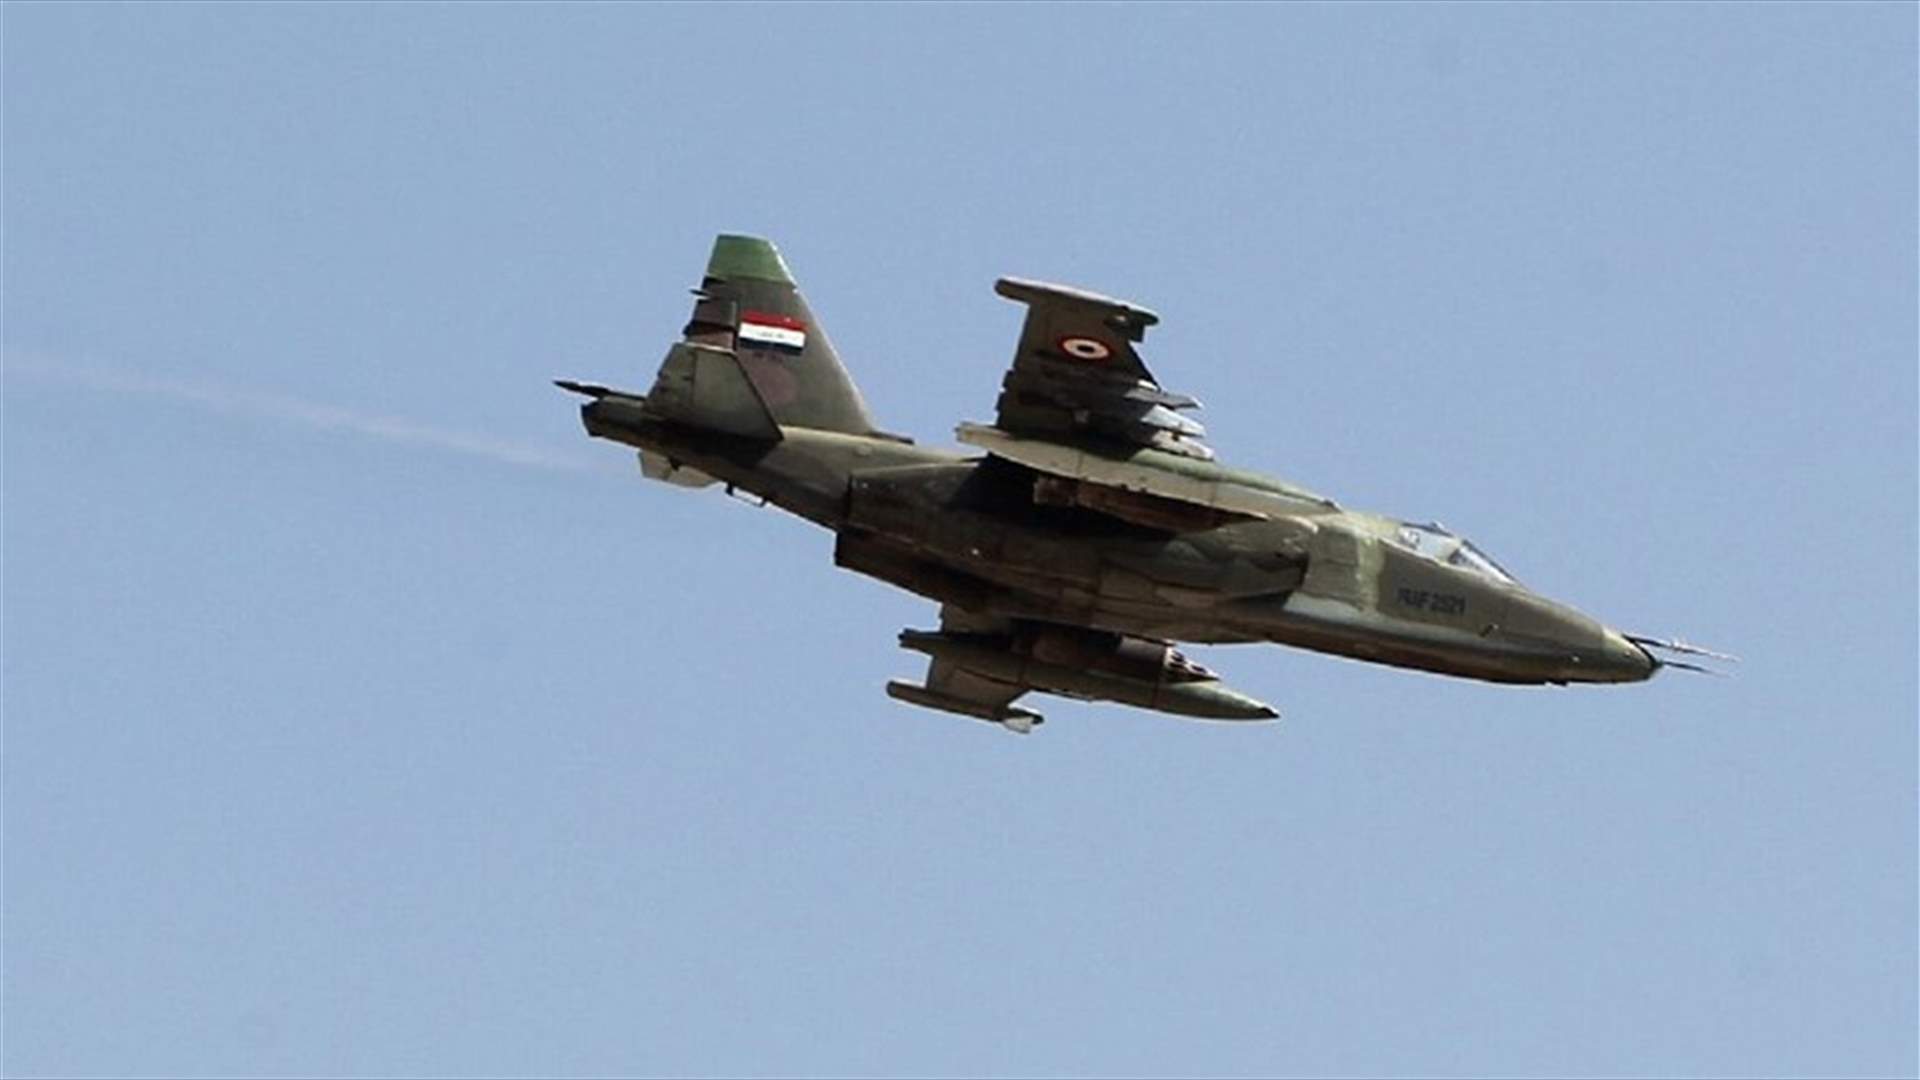 Iraq says three missing after Air Force plane crashes near Kirkuk